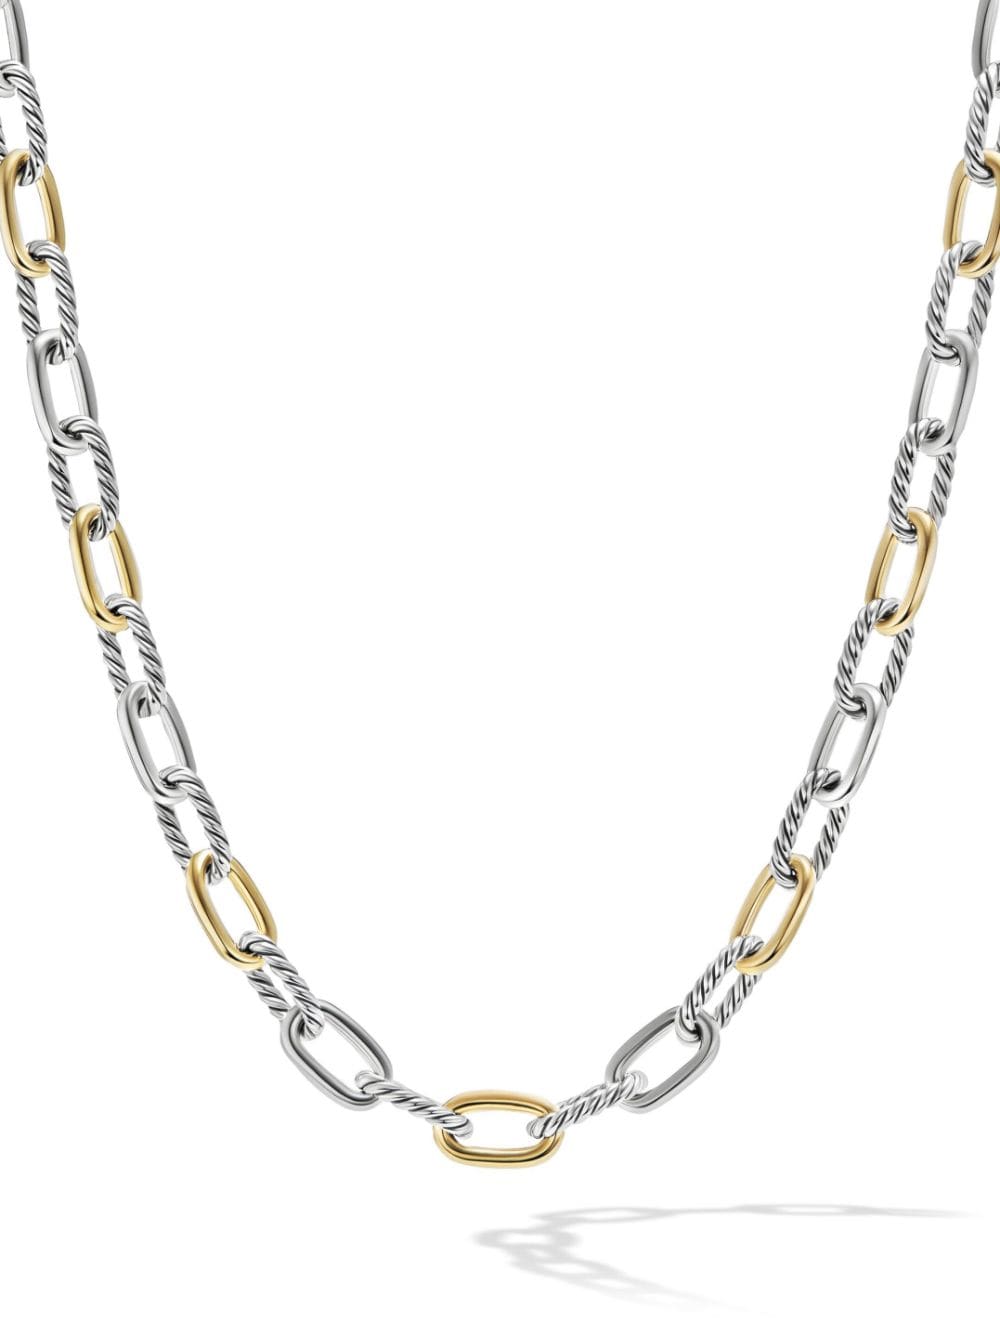 David Yurman 18kt yellow gold and silver Madison 8.5mm chain necklace von David Yurman